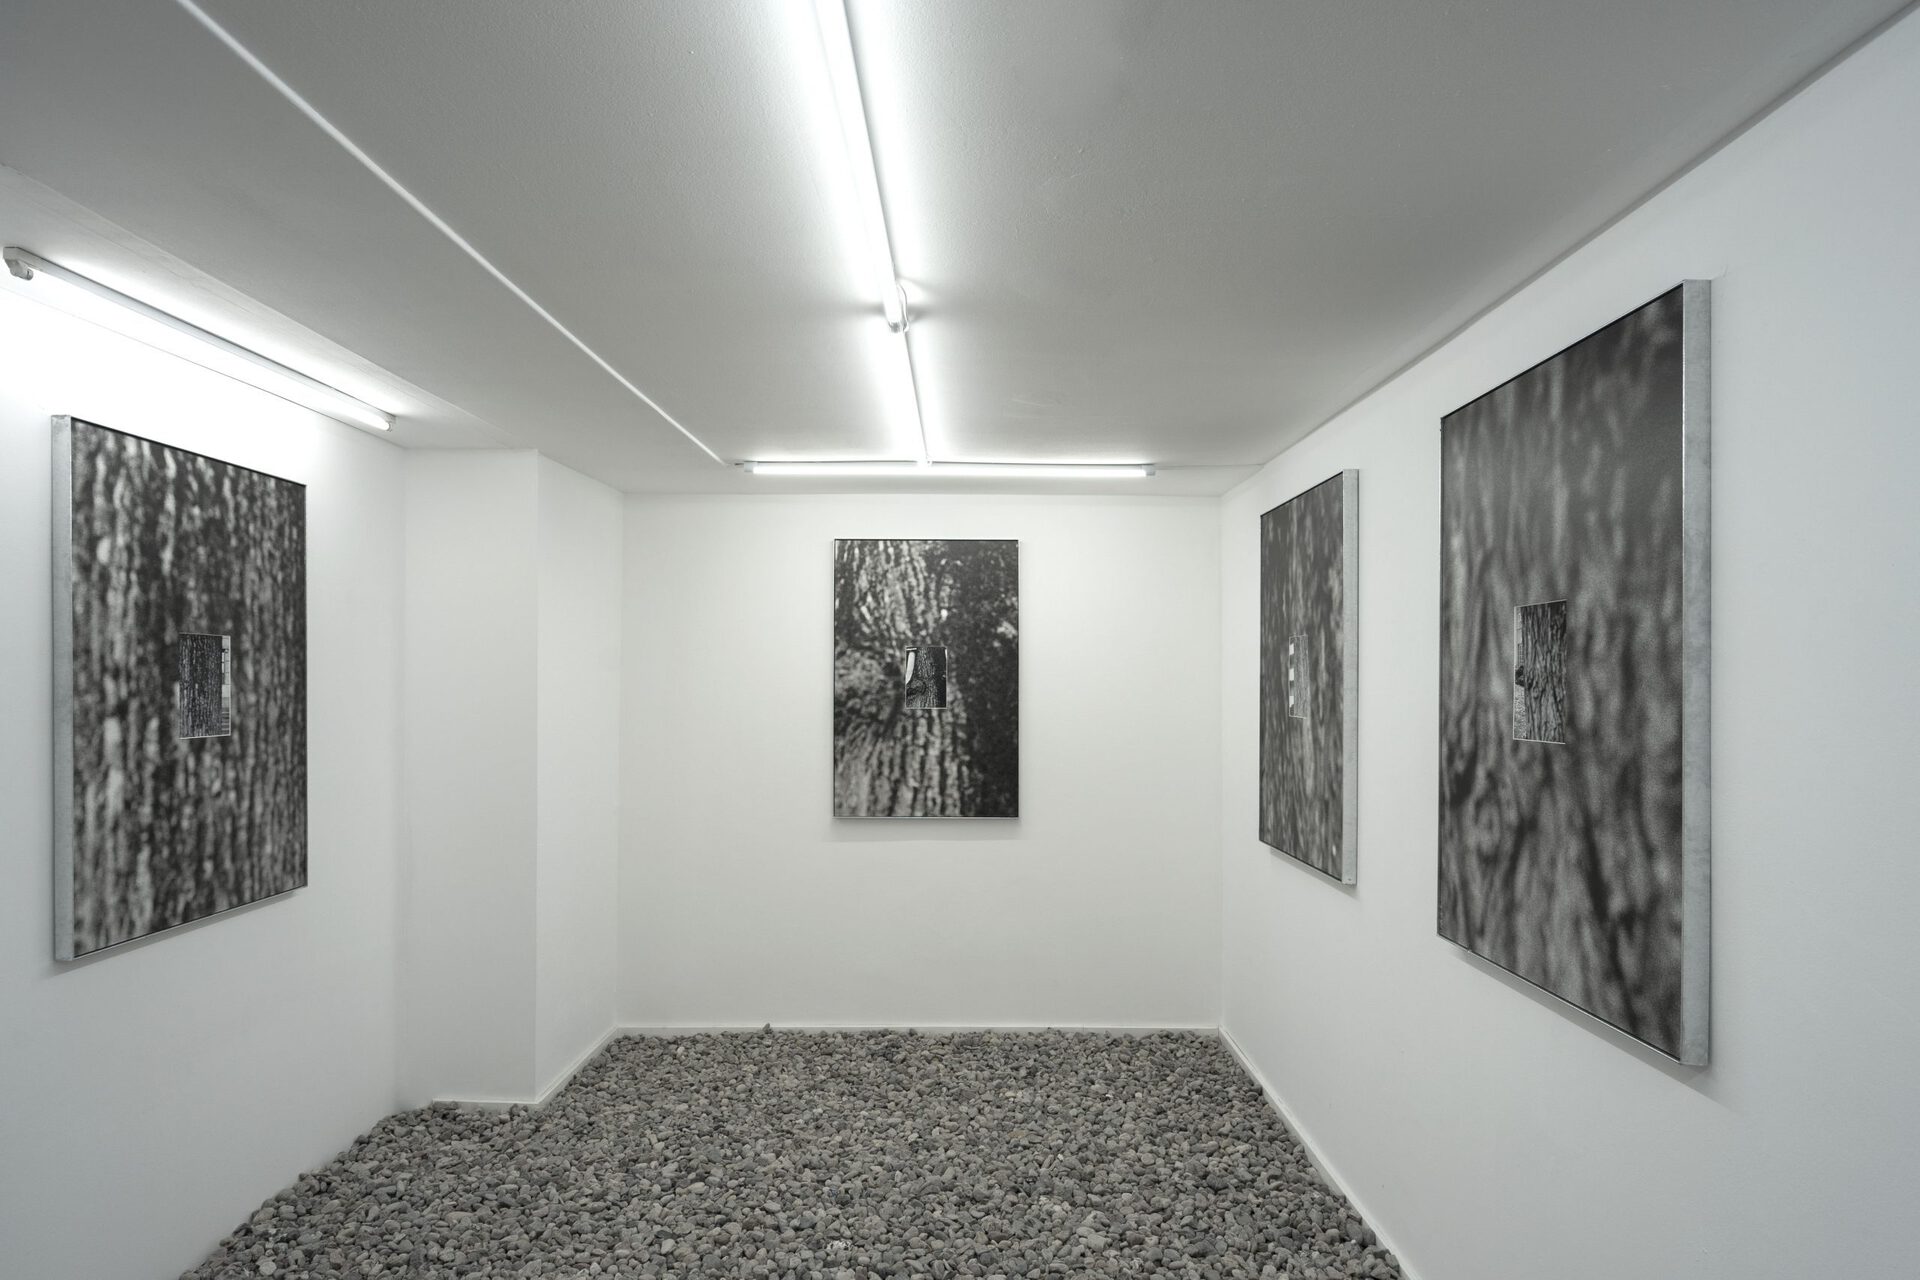 Installation view: Christin Kaiser, "Künftige Ruinen", Åplus Berlin, 2021